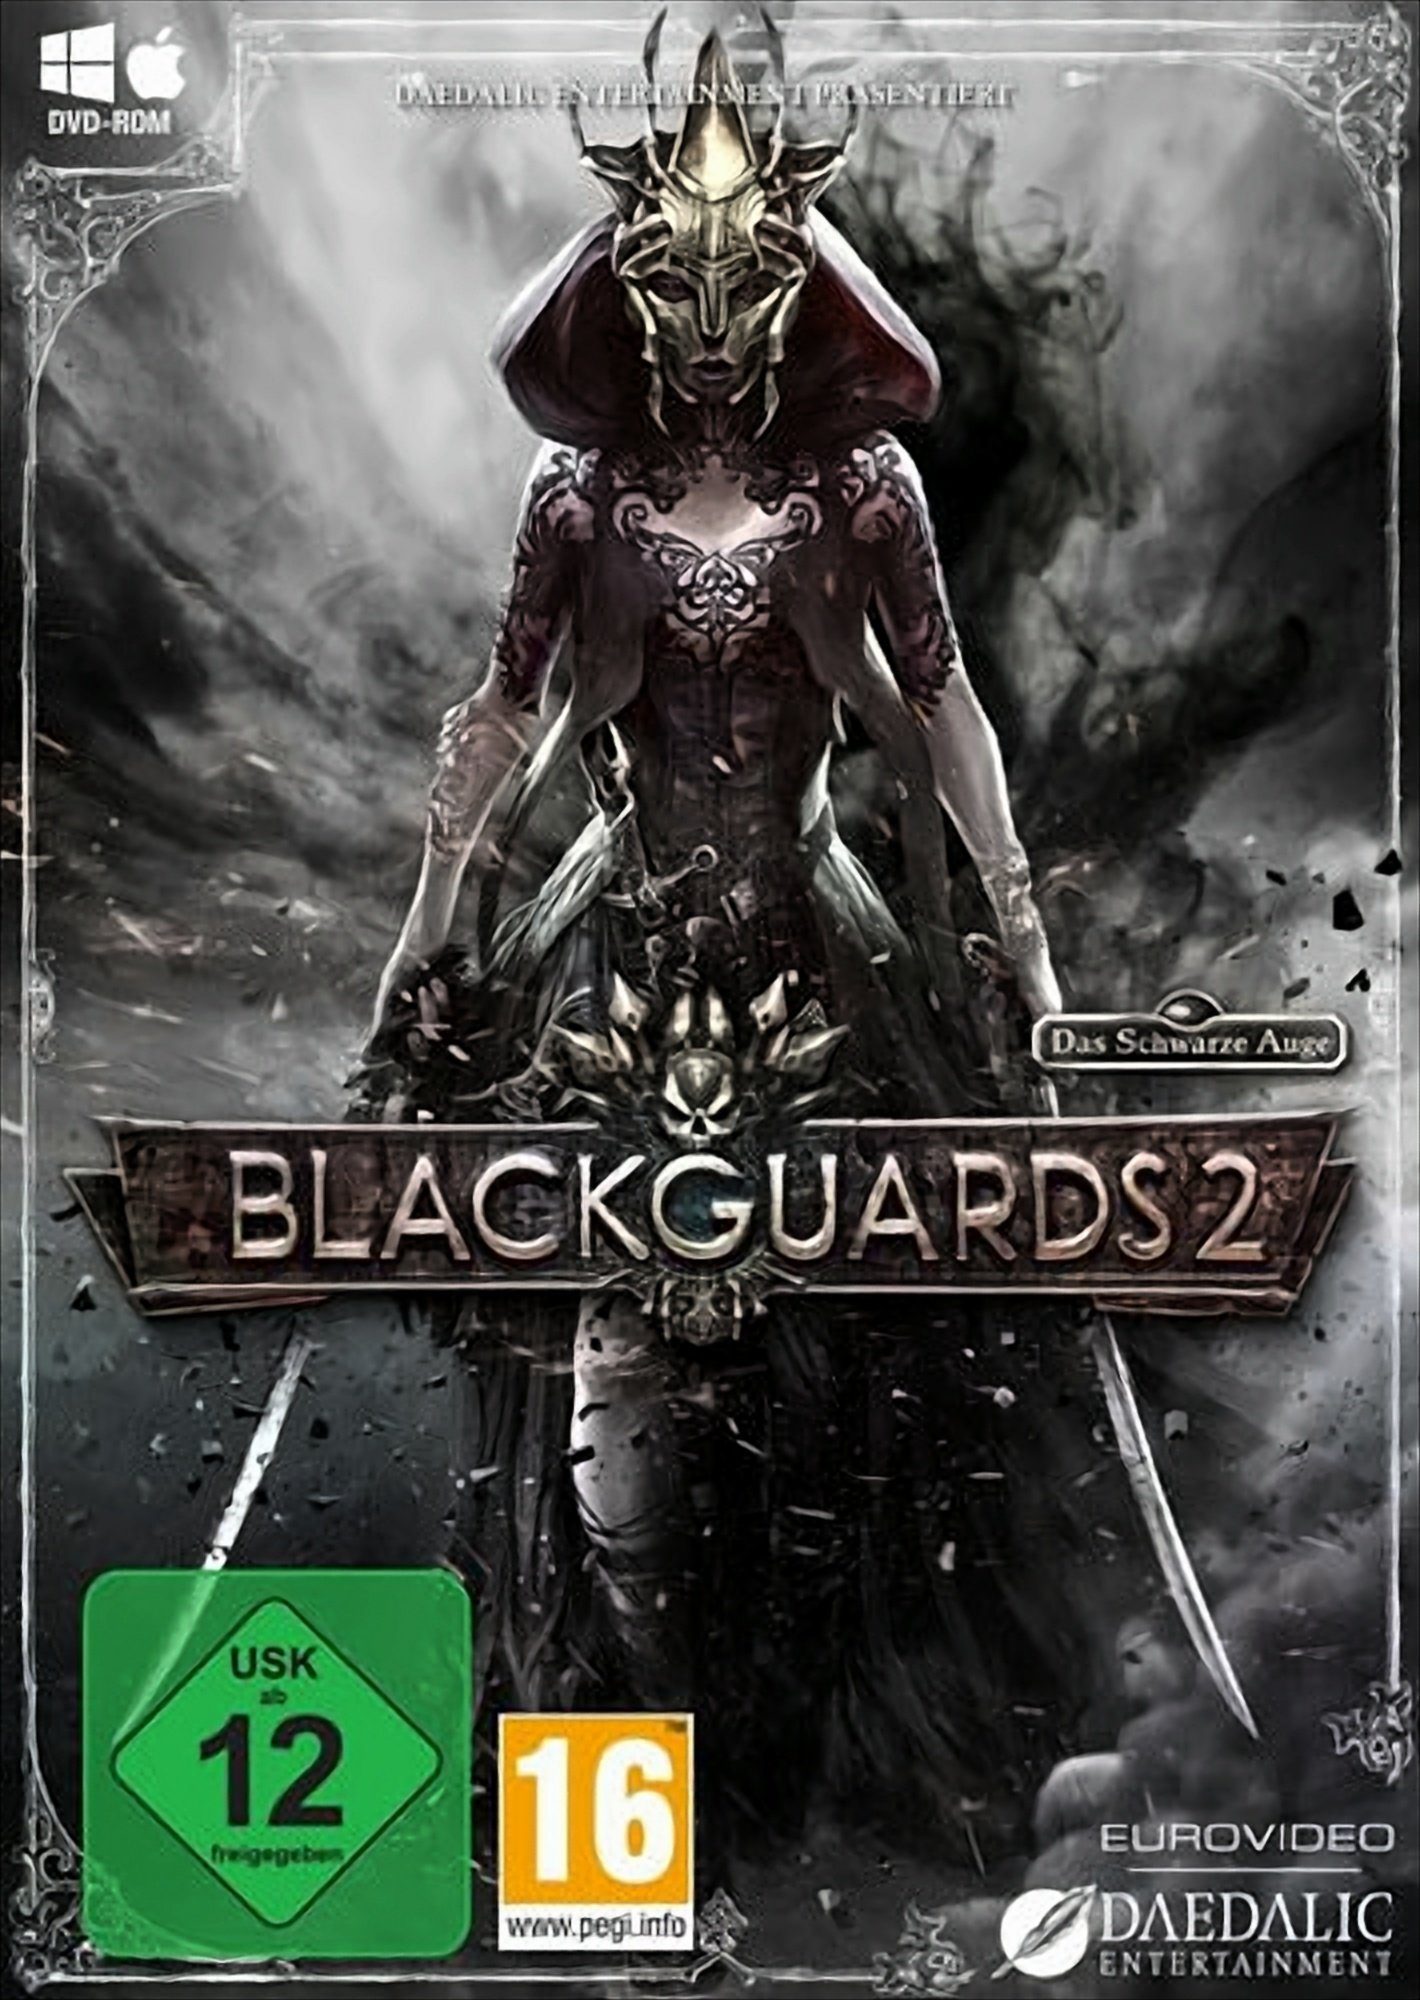 Das Schwarze Auge: Blackguards 2 PC